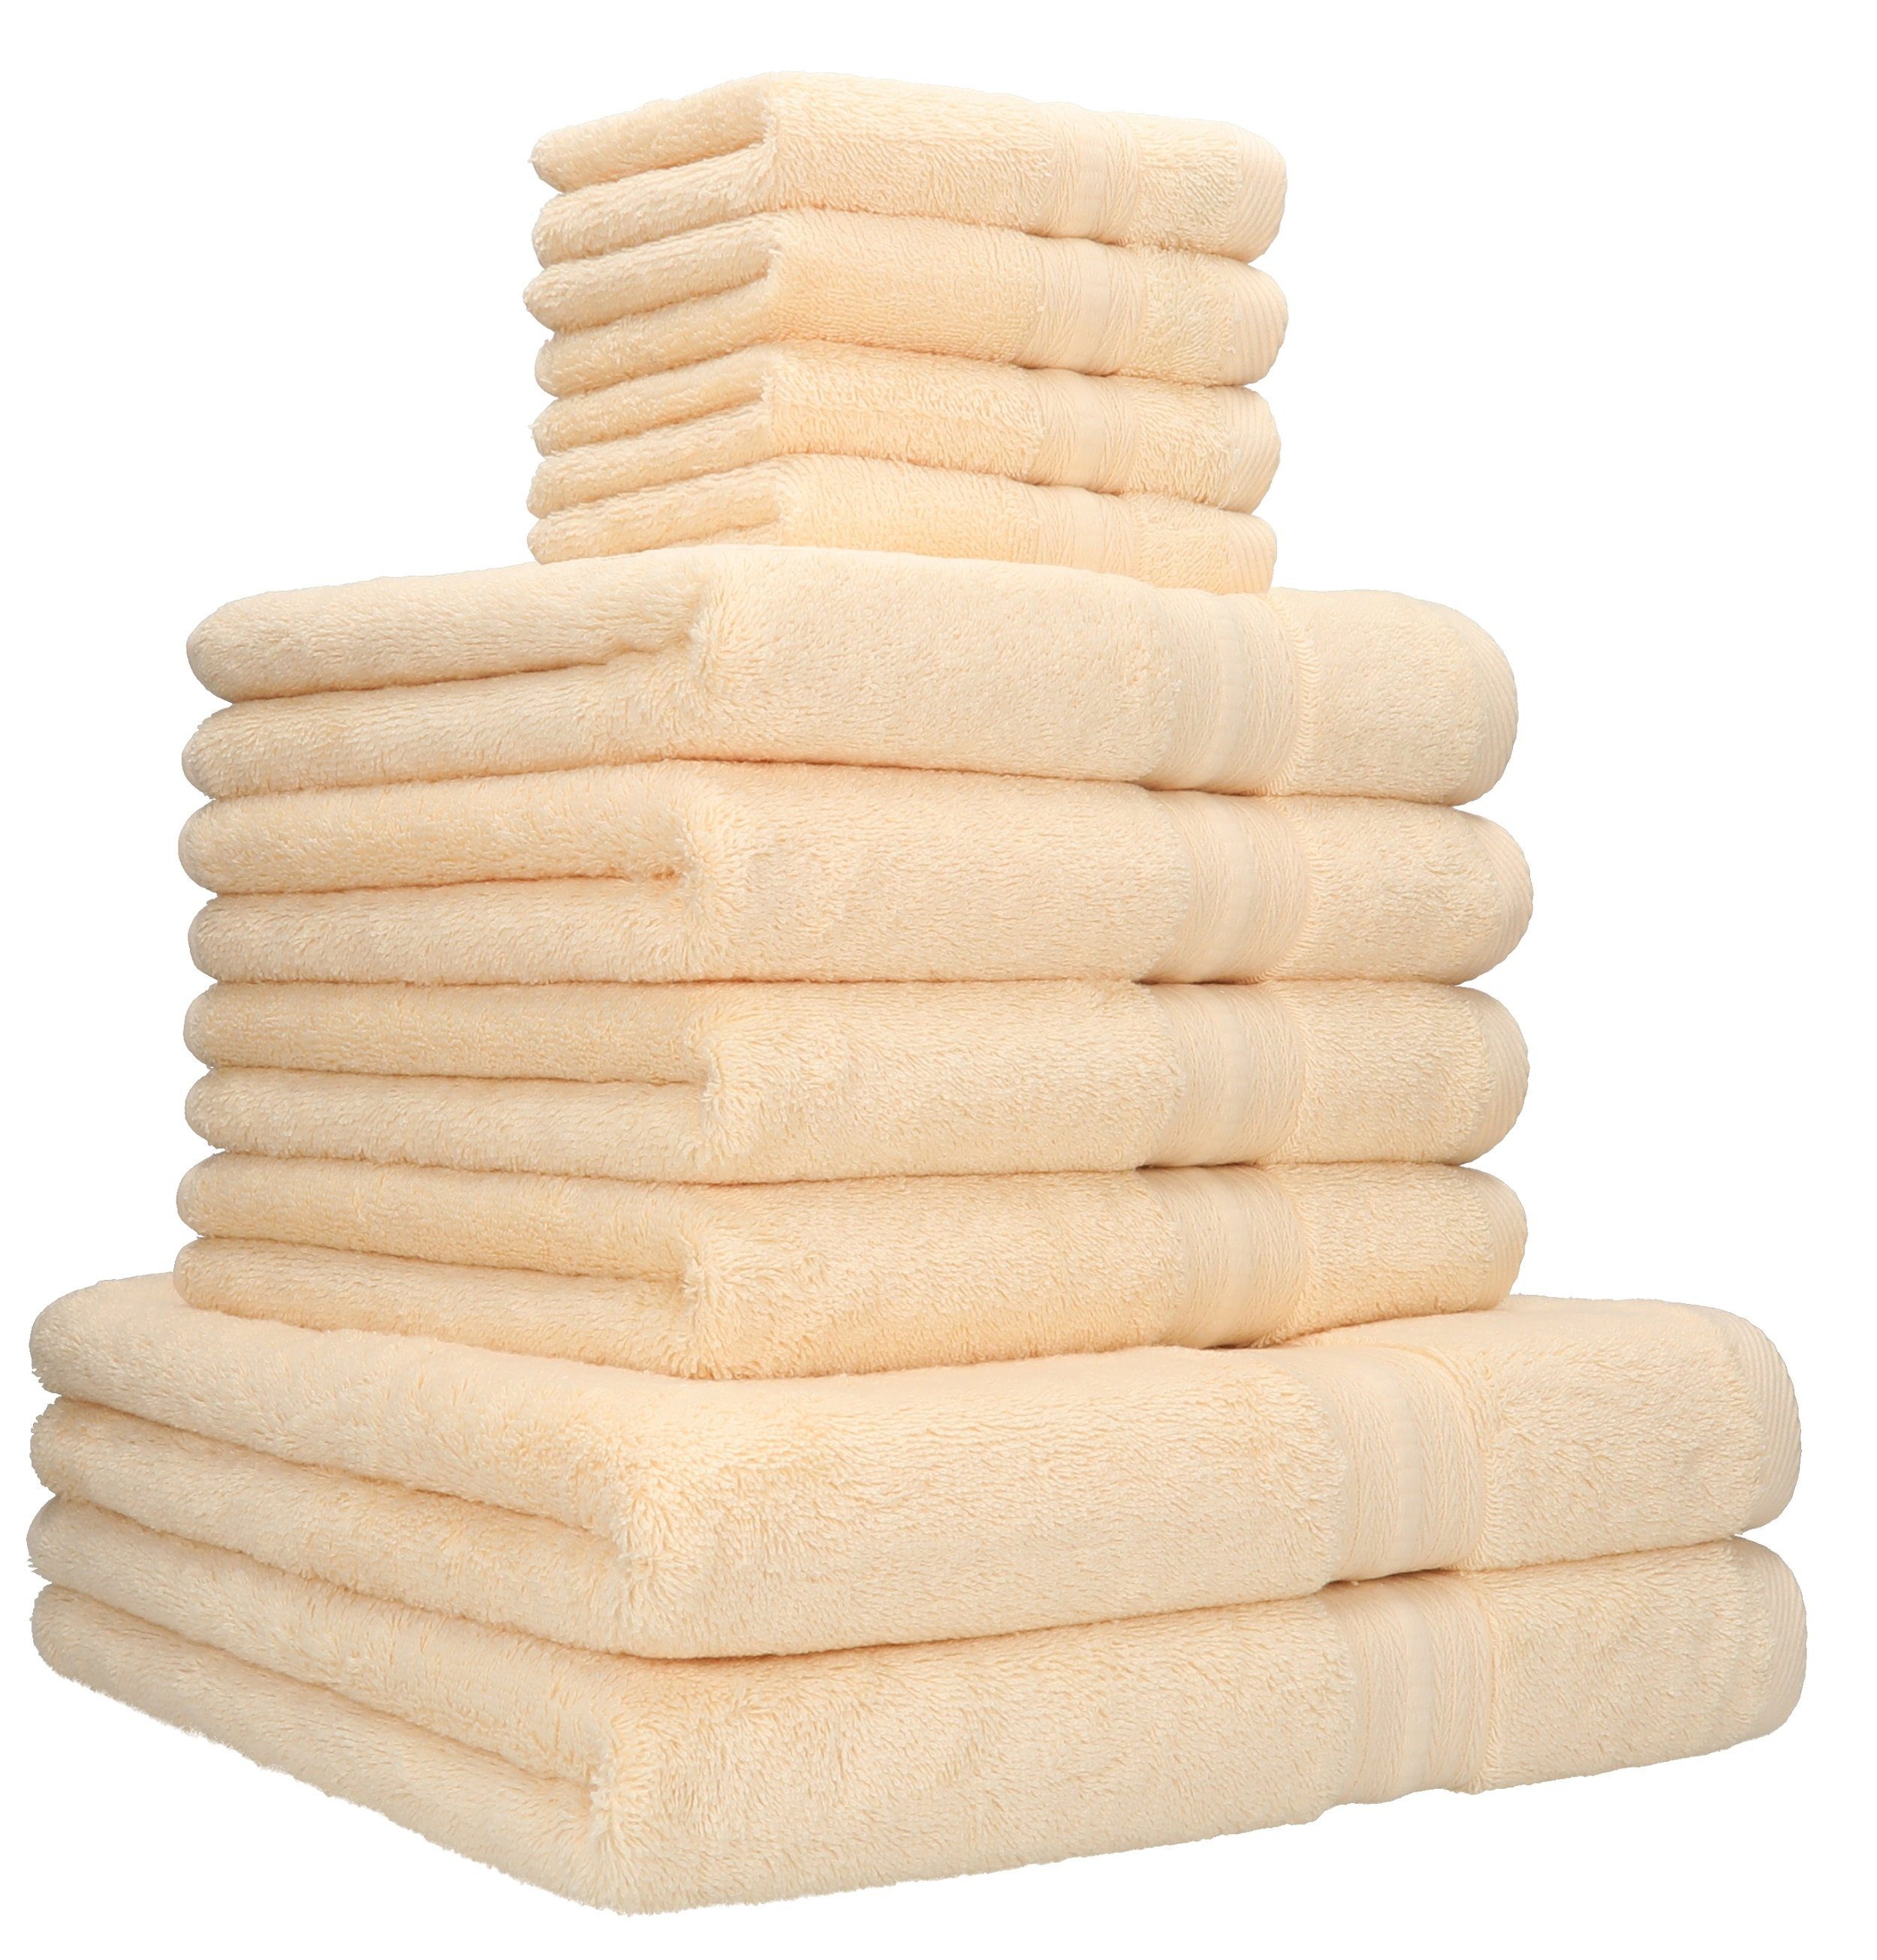 Betz Handtuch Set 10-TLG. Handtuch-Set GOLD Luxus Qualität 600g/m² 100% Baumwolle 2 Duschtücher 4 Handtücher 4 Seiftücher Farbe beige, 100% Baumwolle